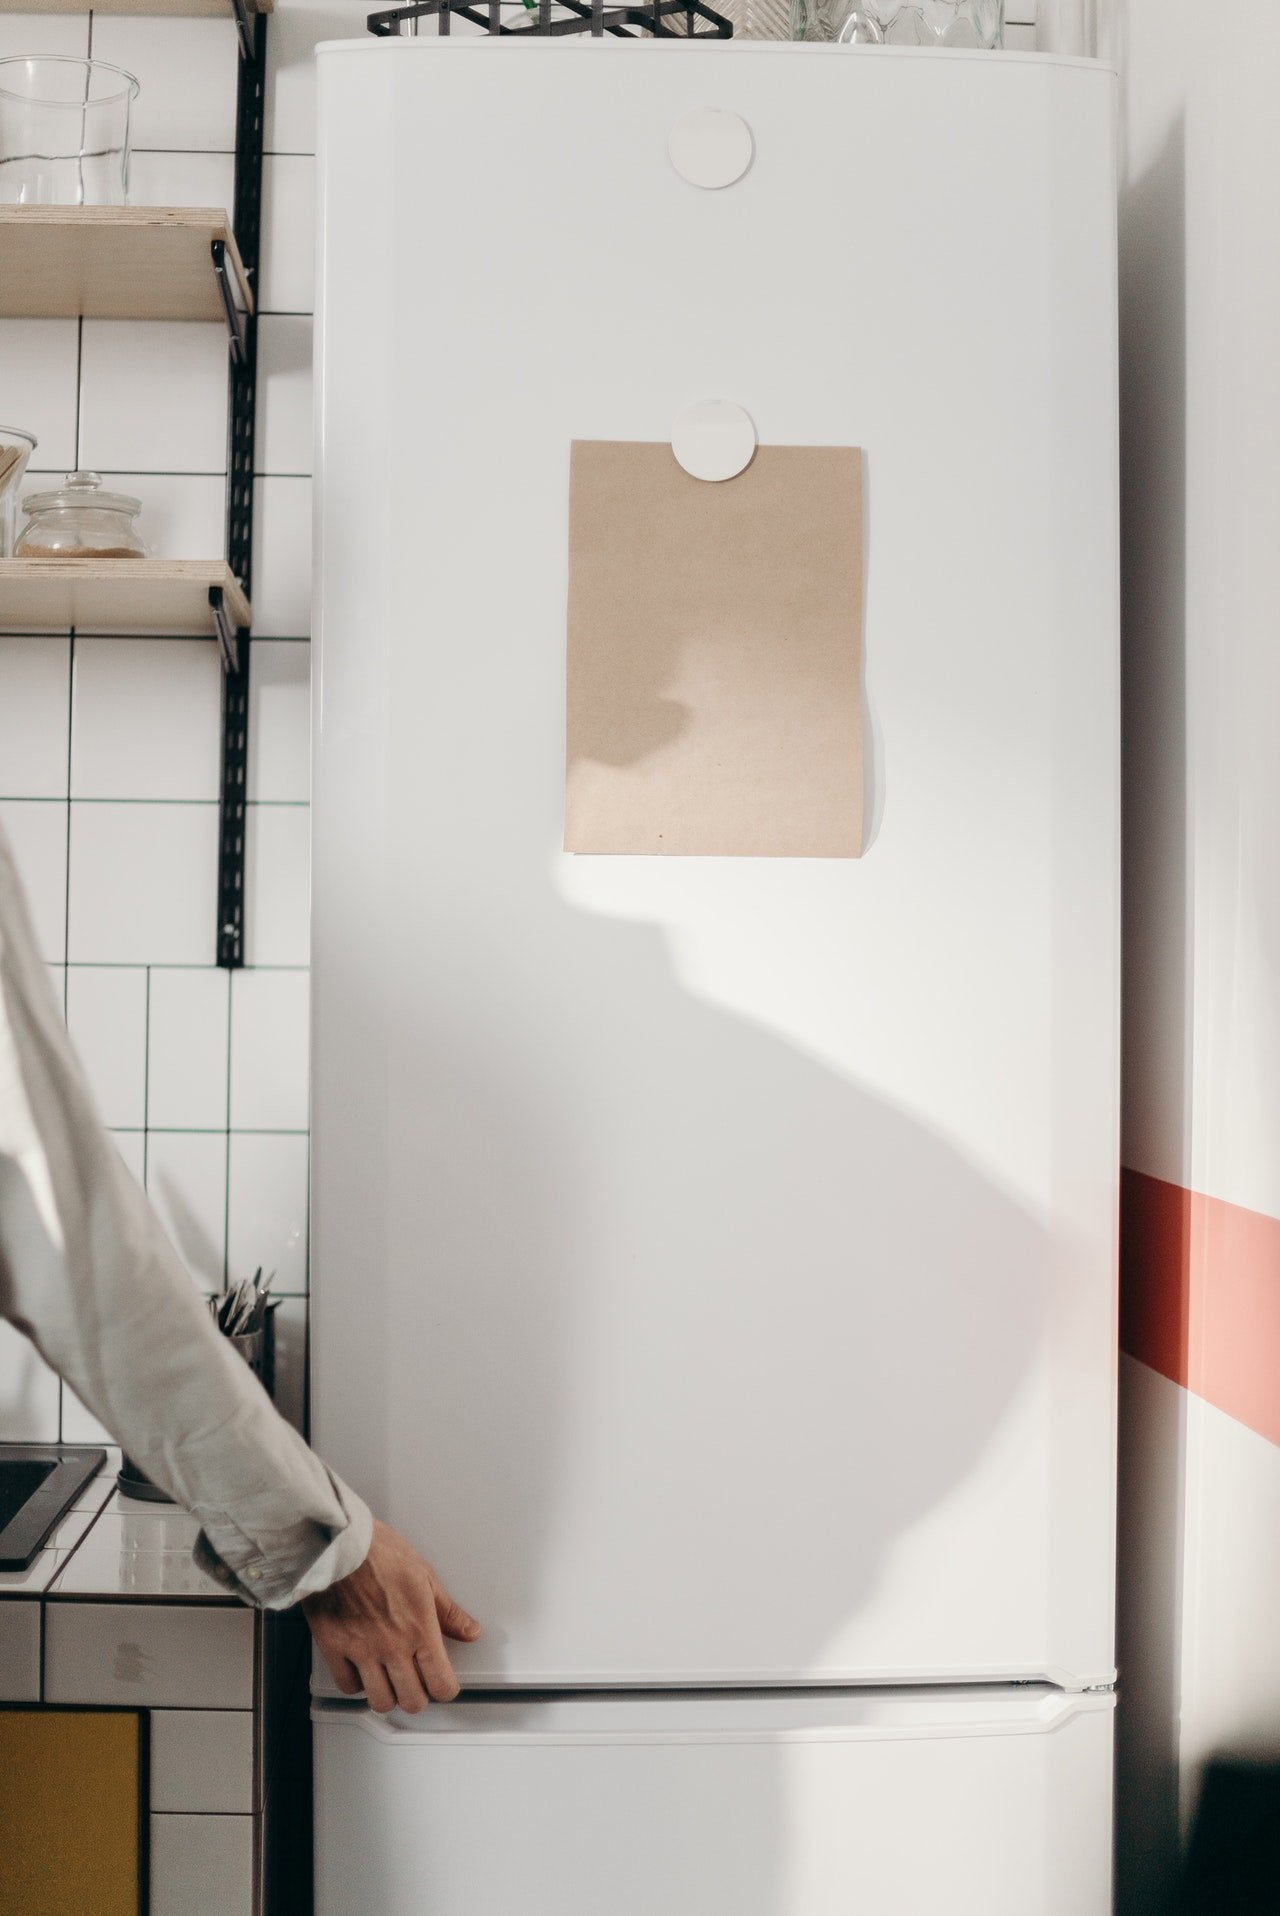 Photo of someone closing a fridge | Photo: Pexels